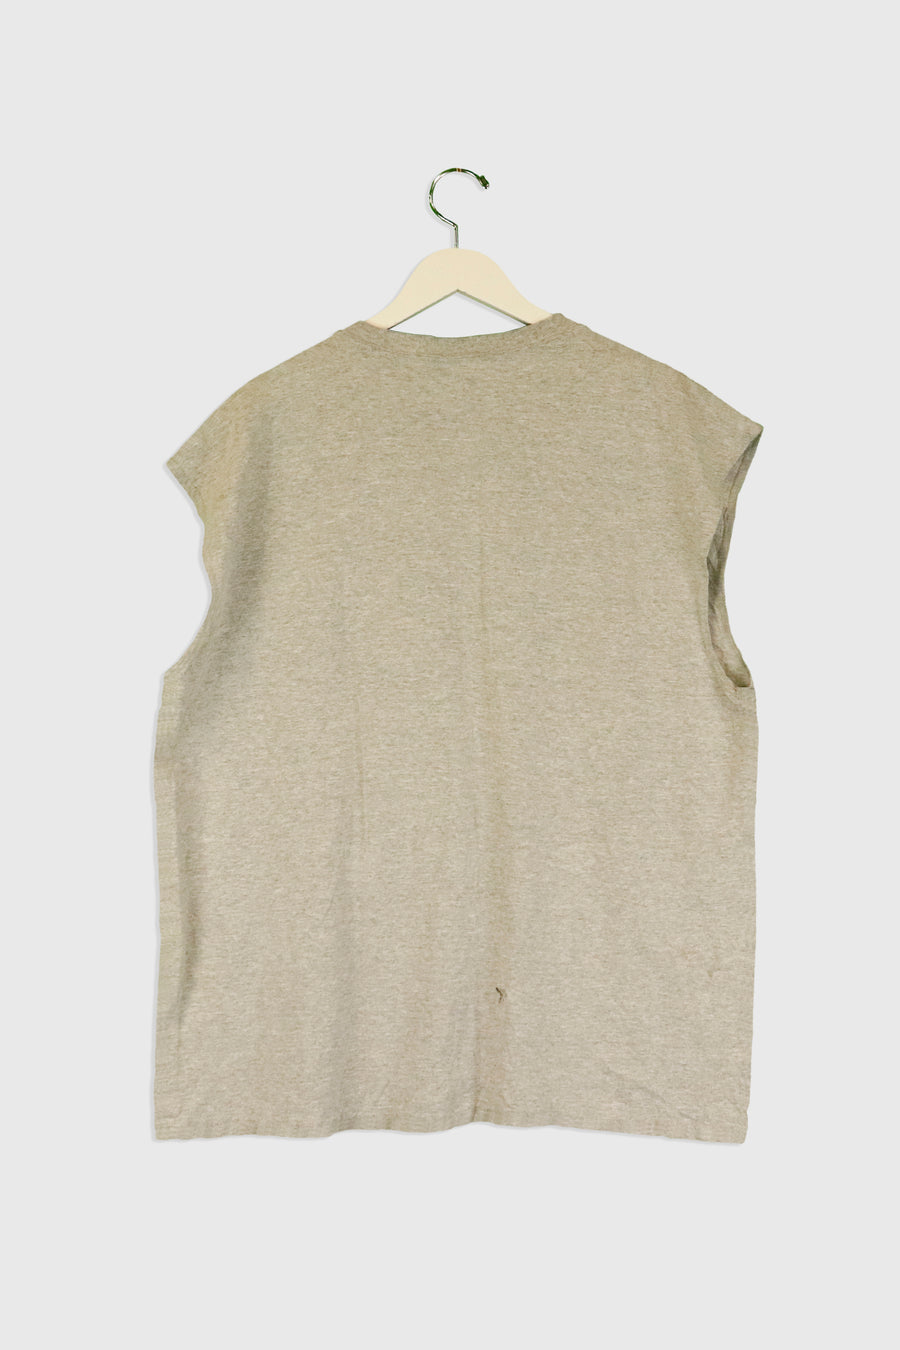 Vintage North Carolina Tar Heel Embroidered Sleeveless T Shirt Sz XL